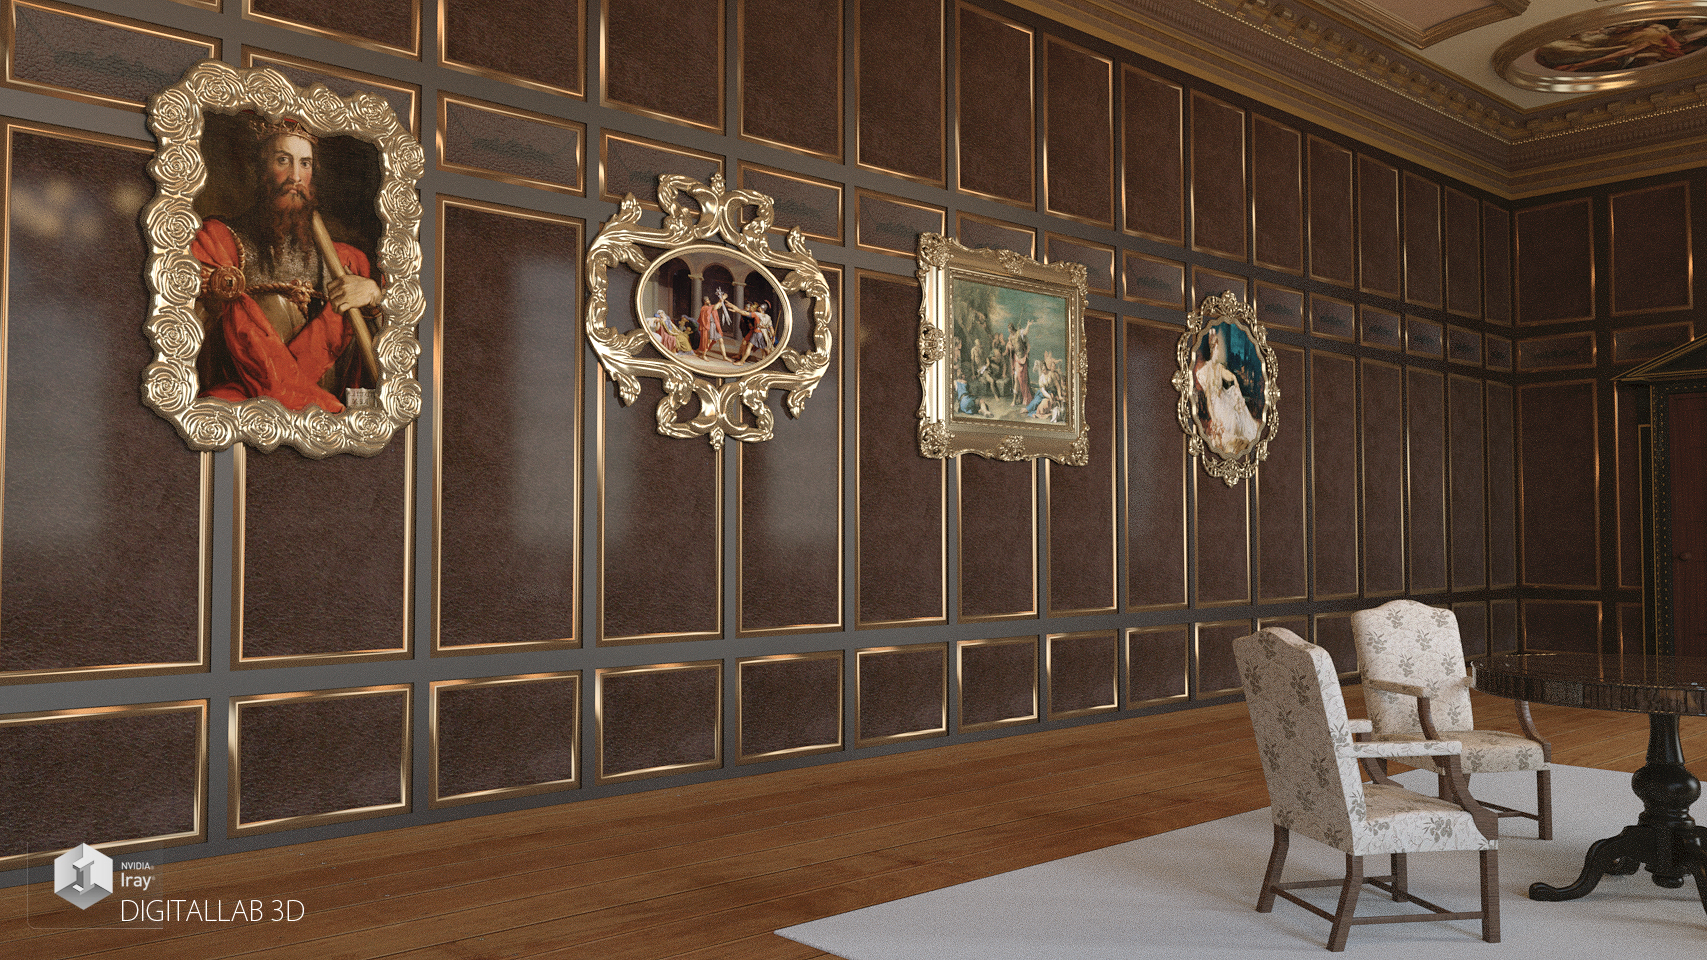 Royal Palace by: Digitallab3D, 3D Models by Daz 3D